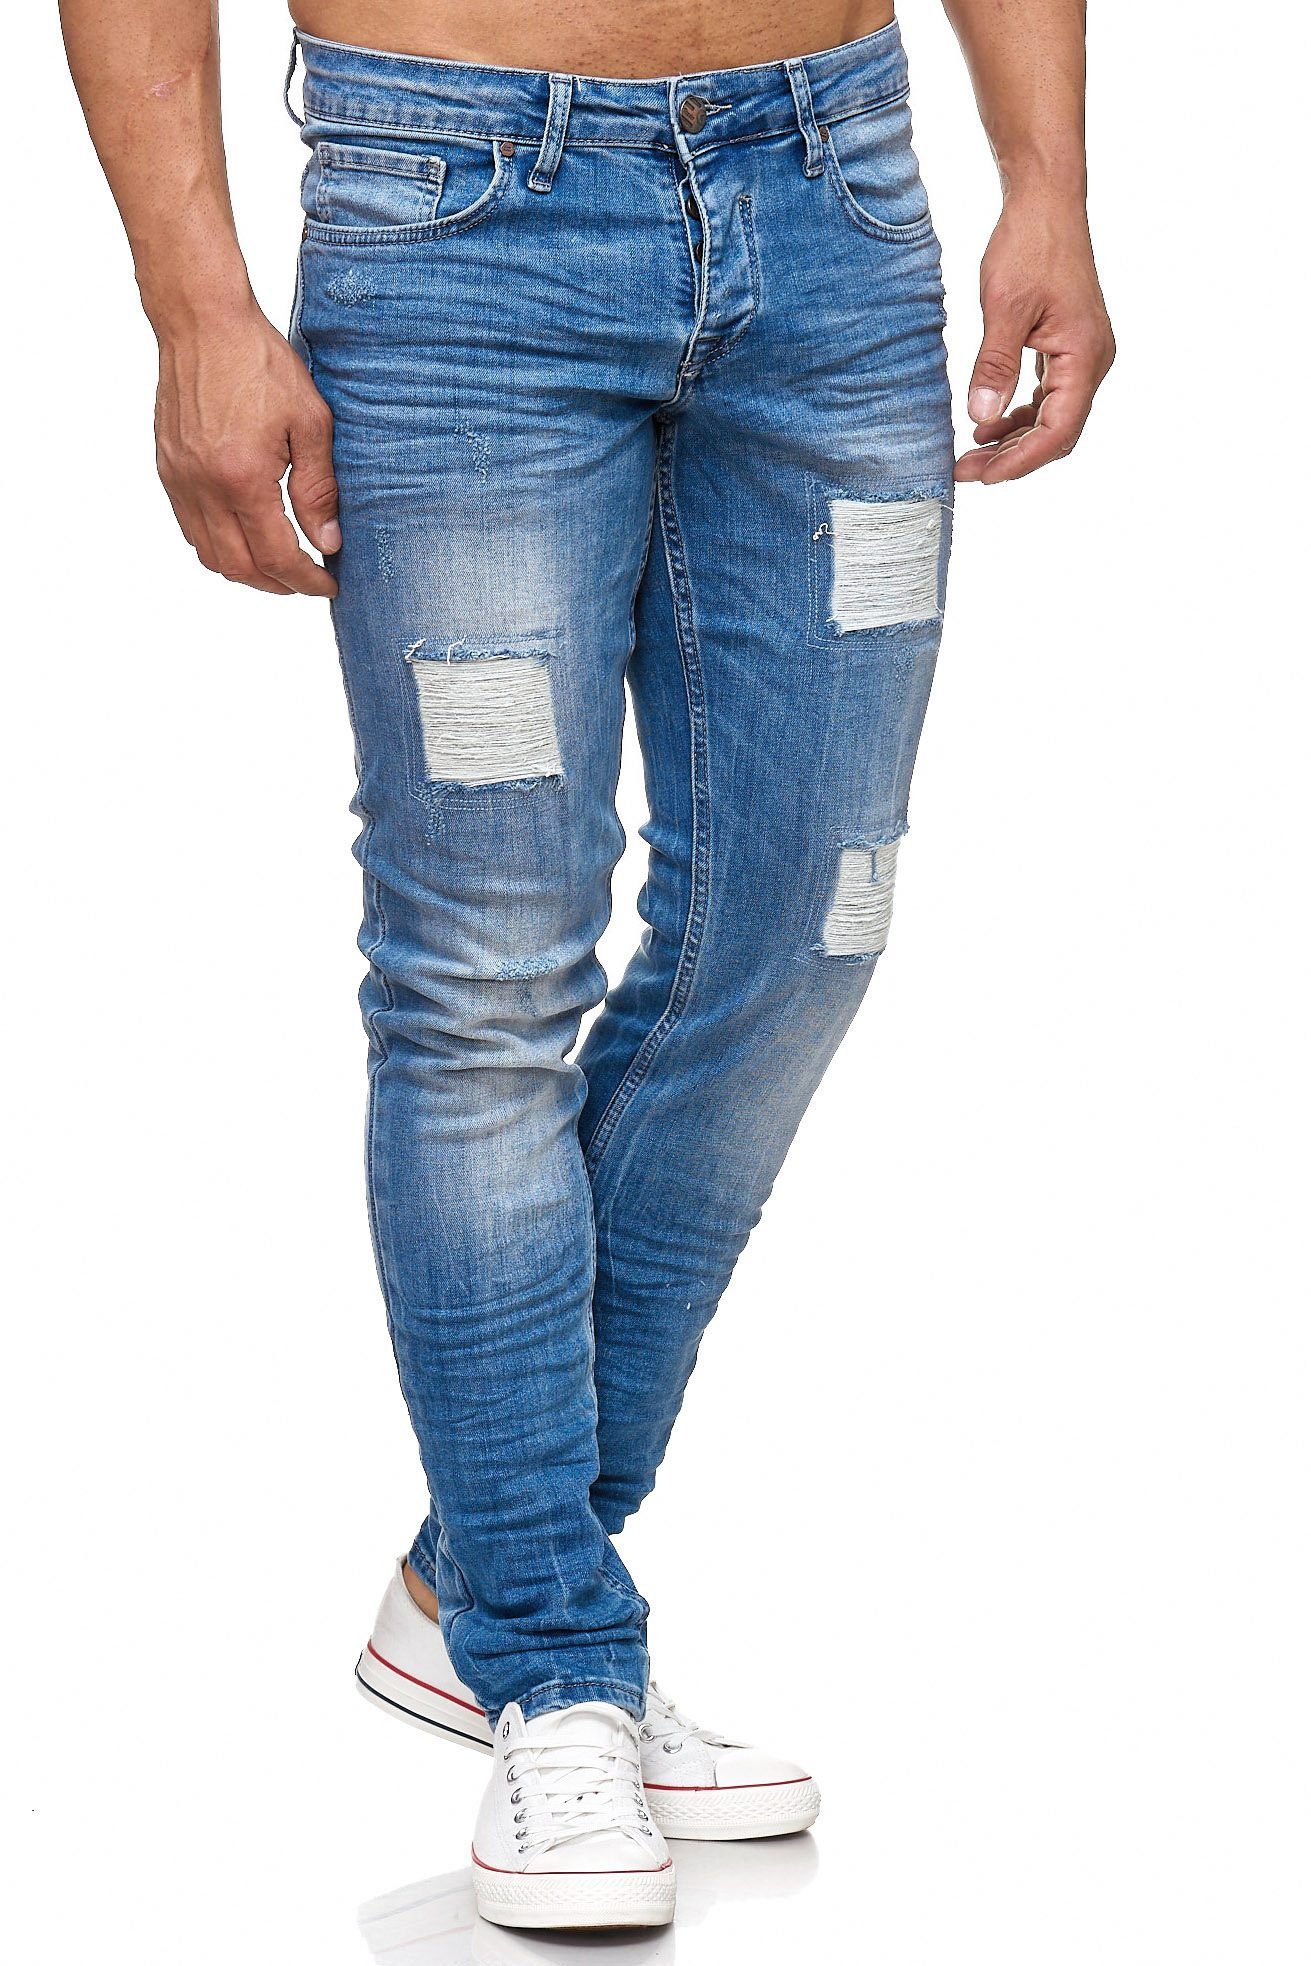 Straight-Jeans im blau Tazzio 17505 Destroyed-Look